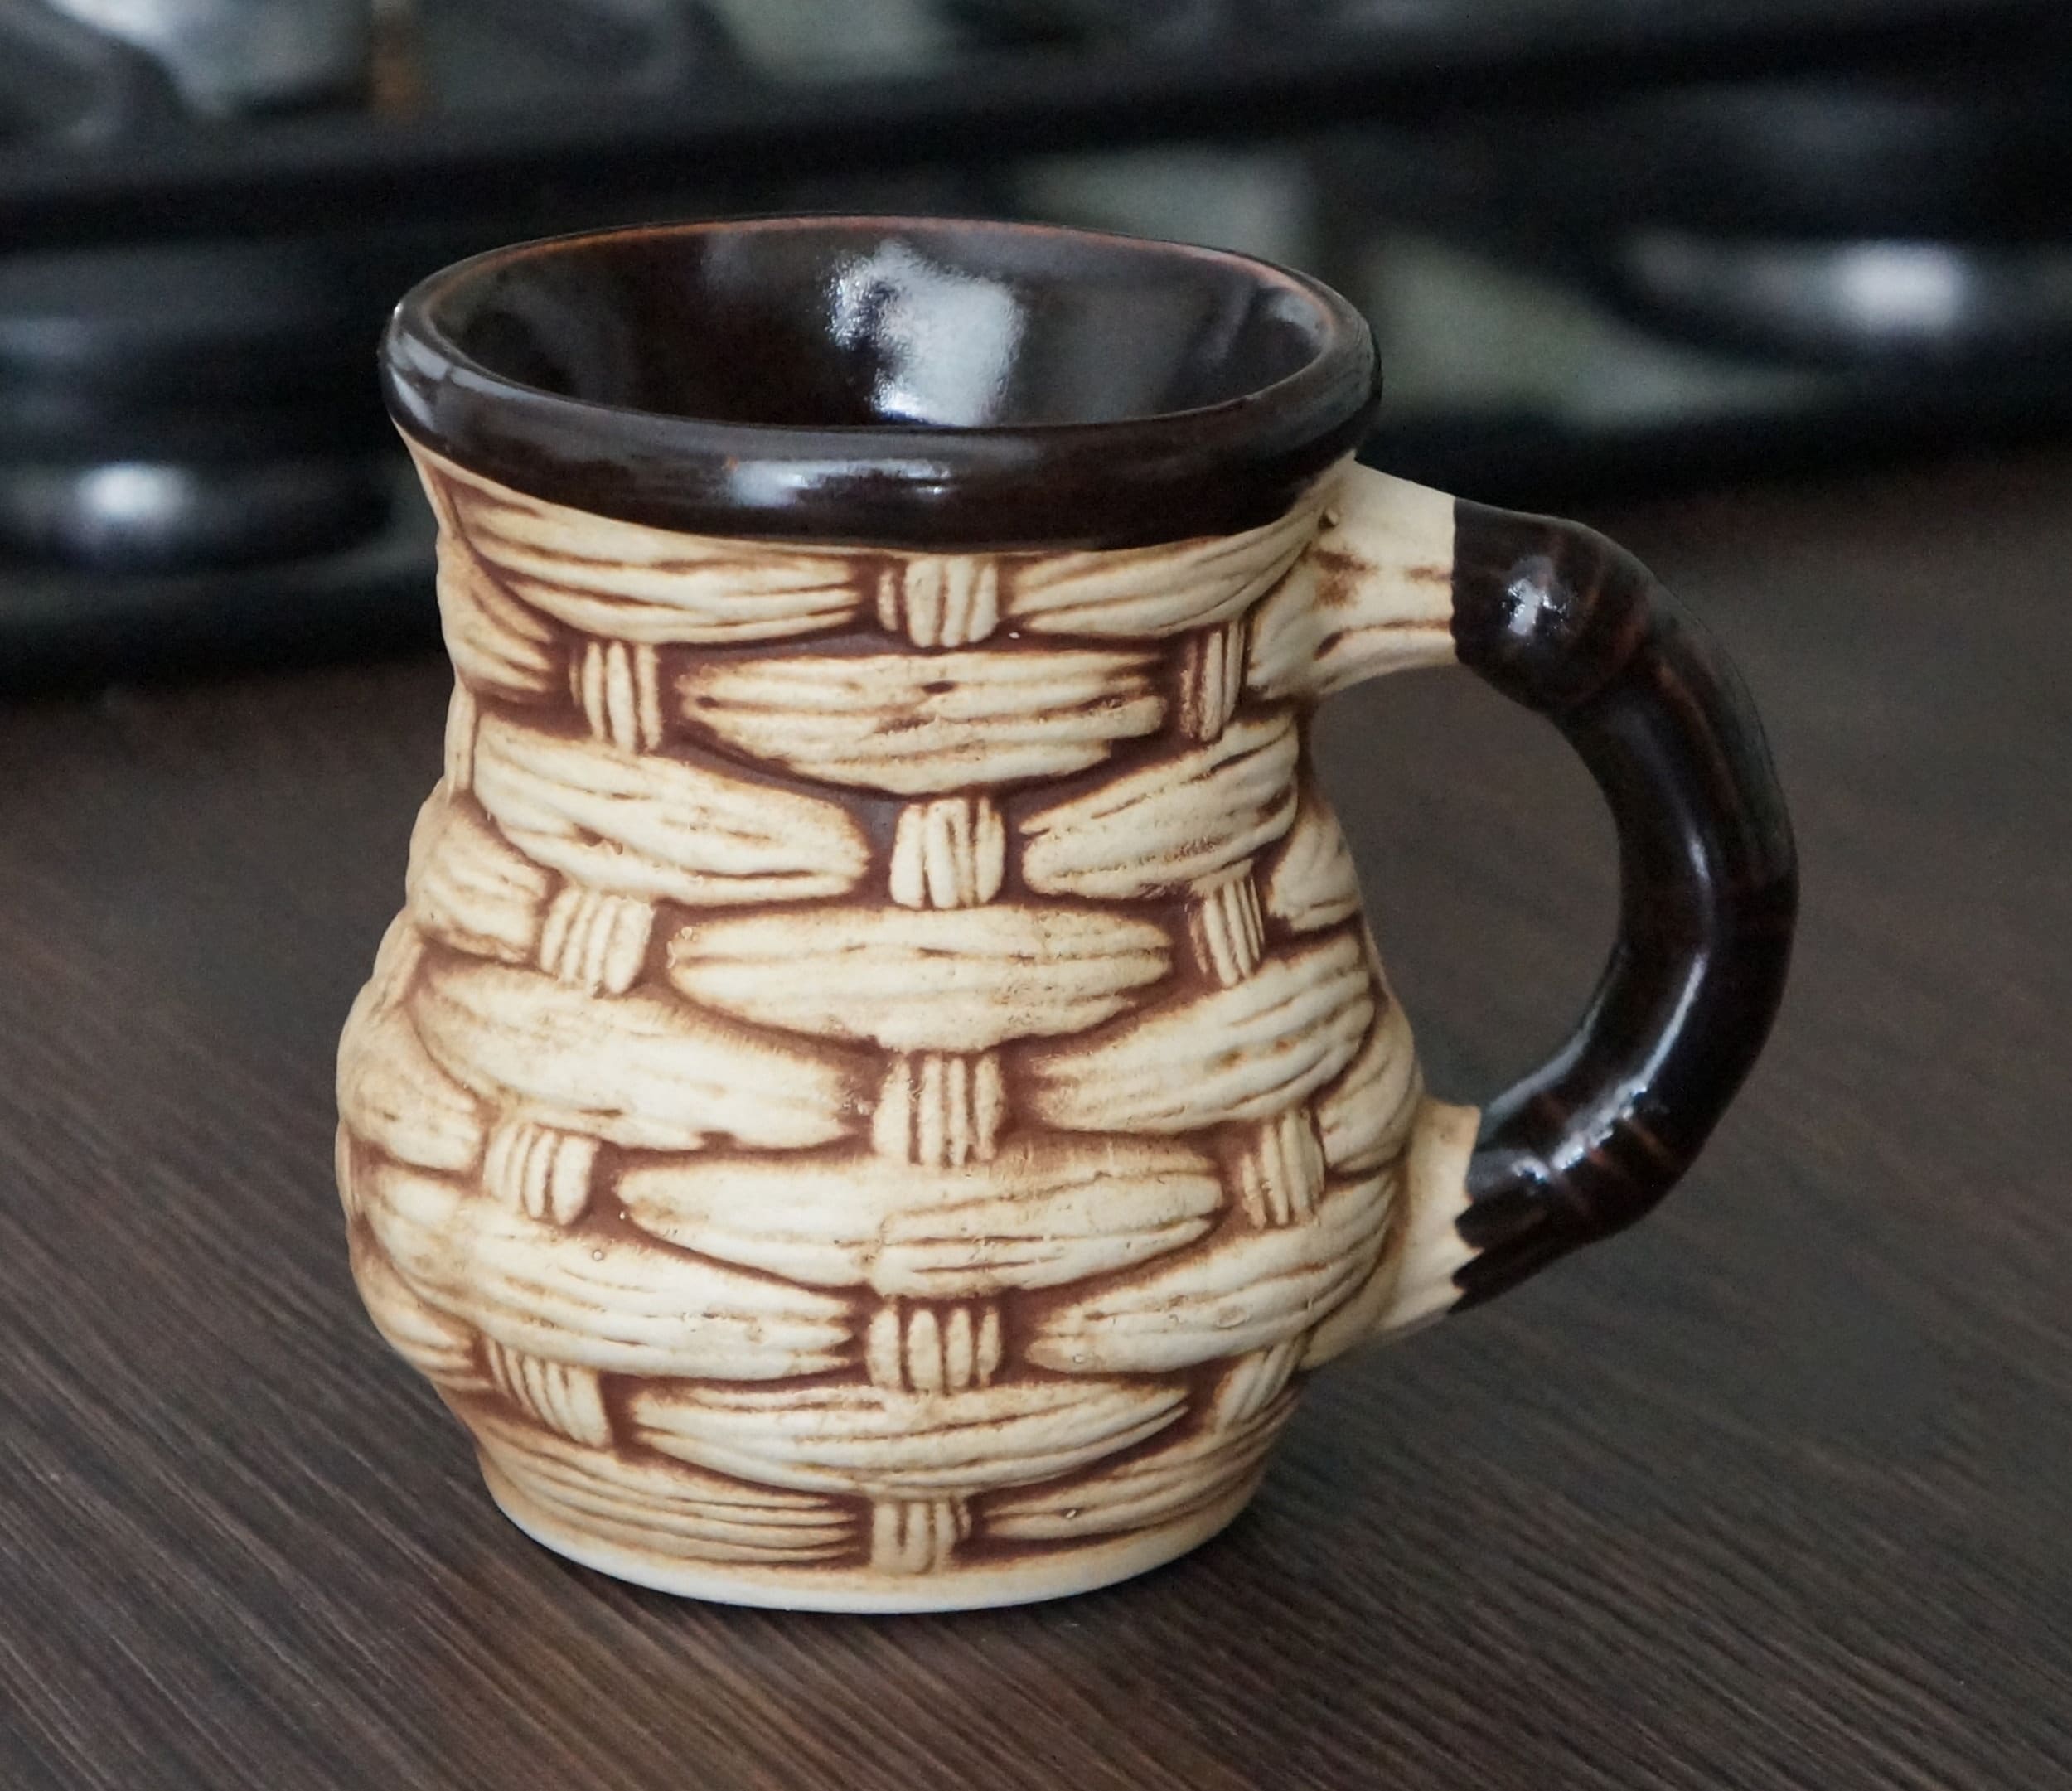 Mora Ceramic Mini Espresso Cups Set of 4, 3oz - Tiny Italian Inspired Mugs  With Saucers For Small Sh…See more Mora Ceramic Mini Espresso Cups Set of